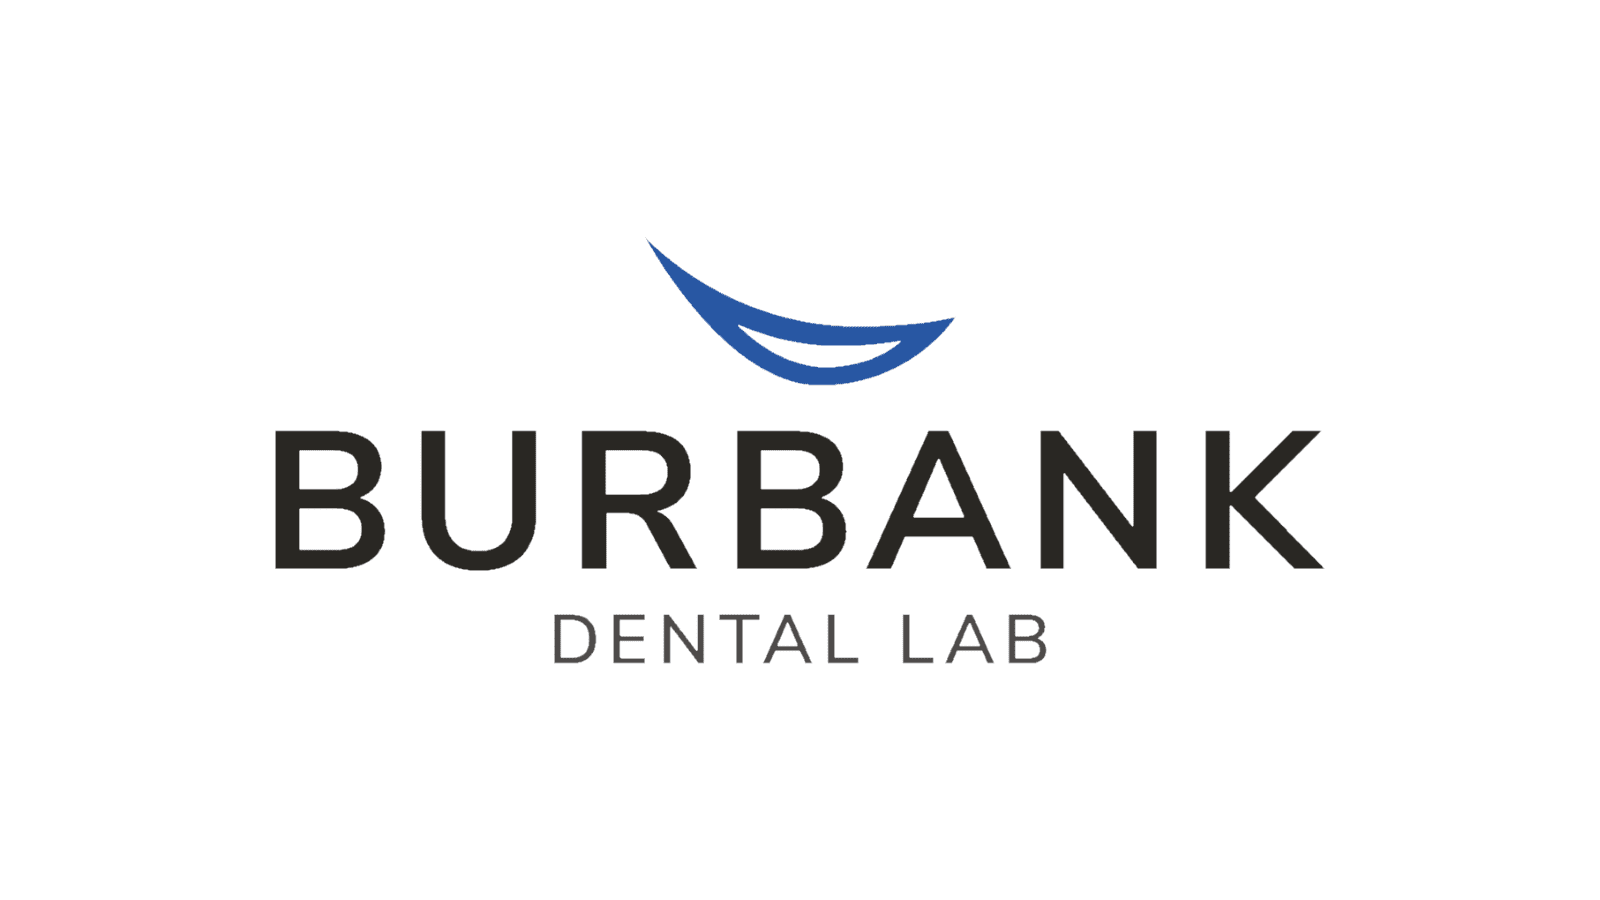 Burbank dental lab